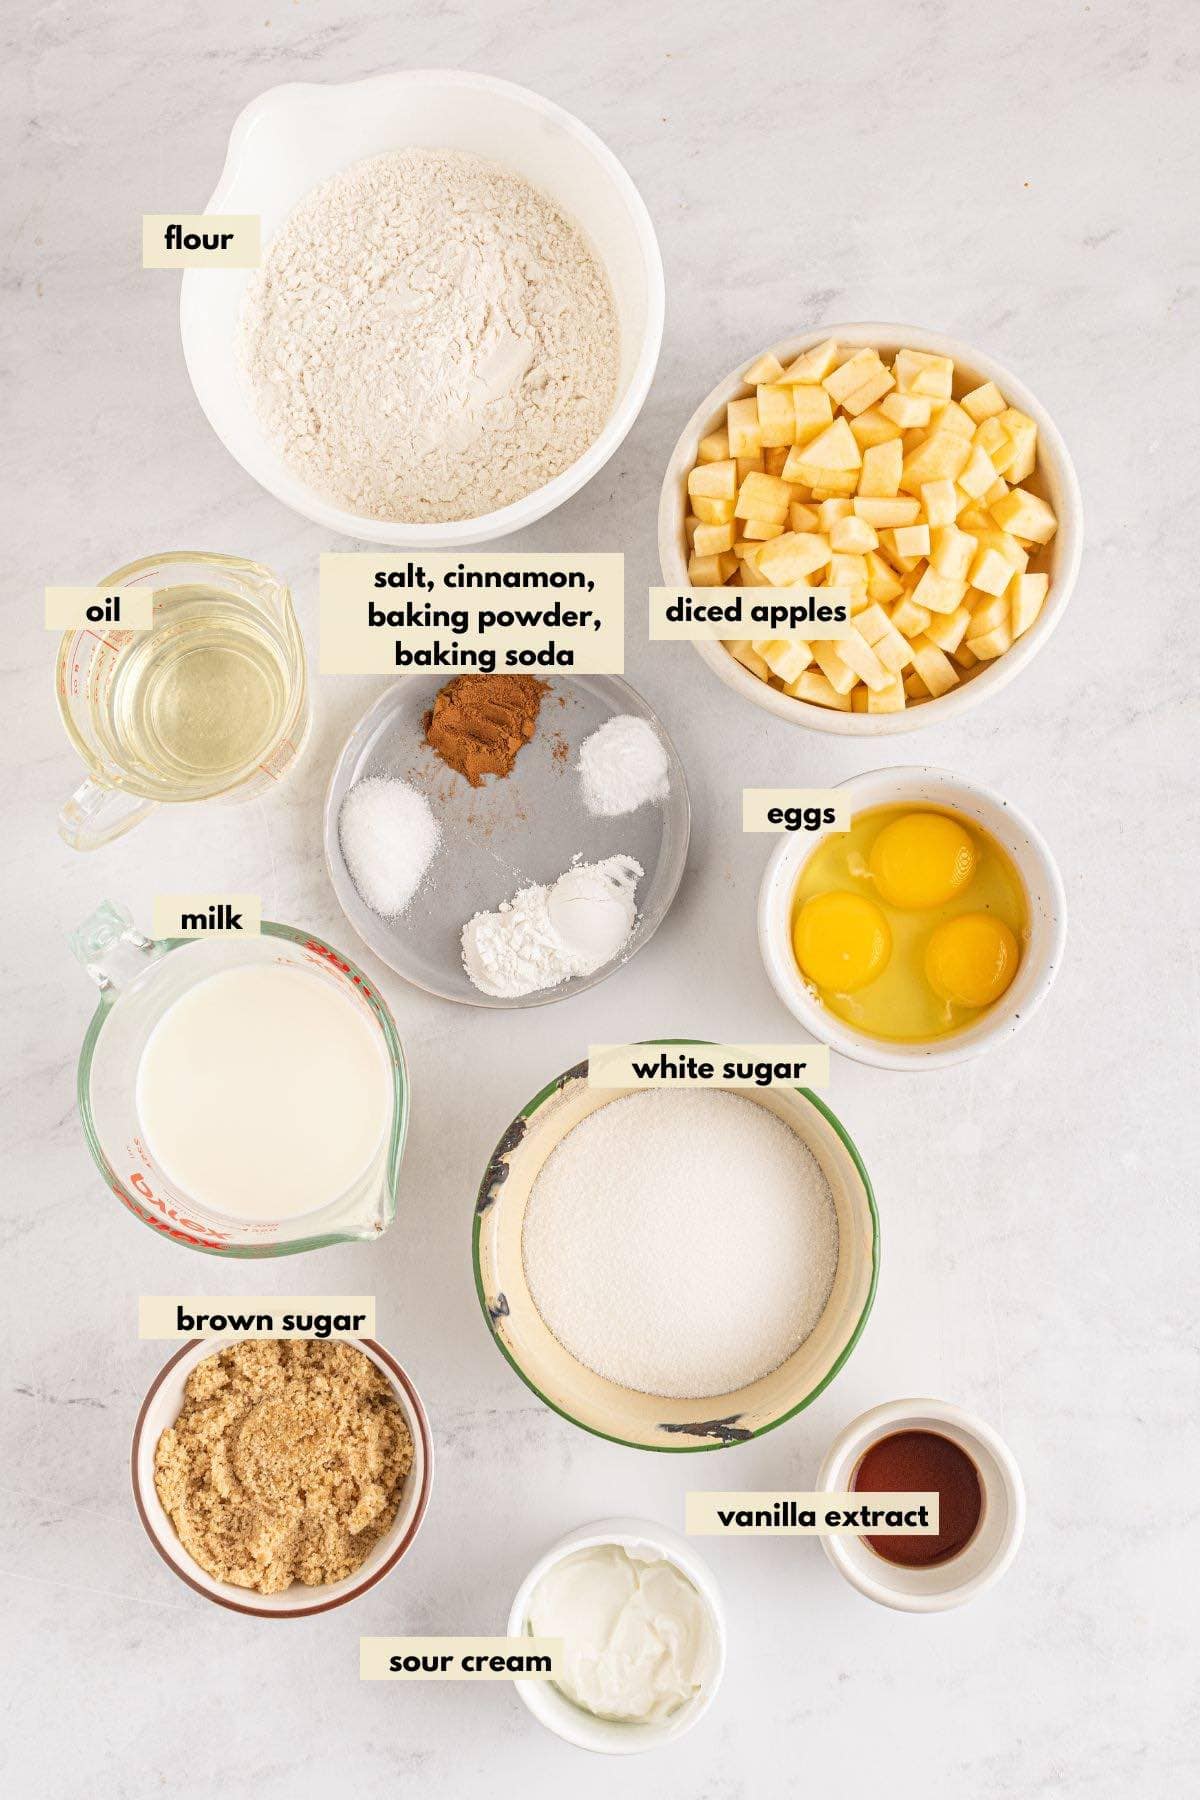 Ingredients to make apple muffins including apples, cinnamon, brown sugar, eggs, flour, oil, sour cream.